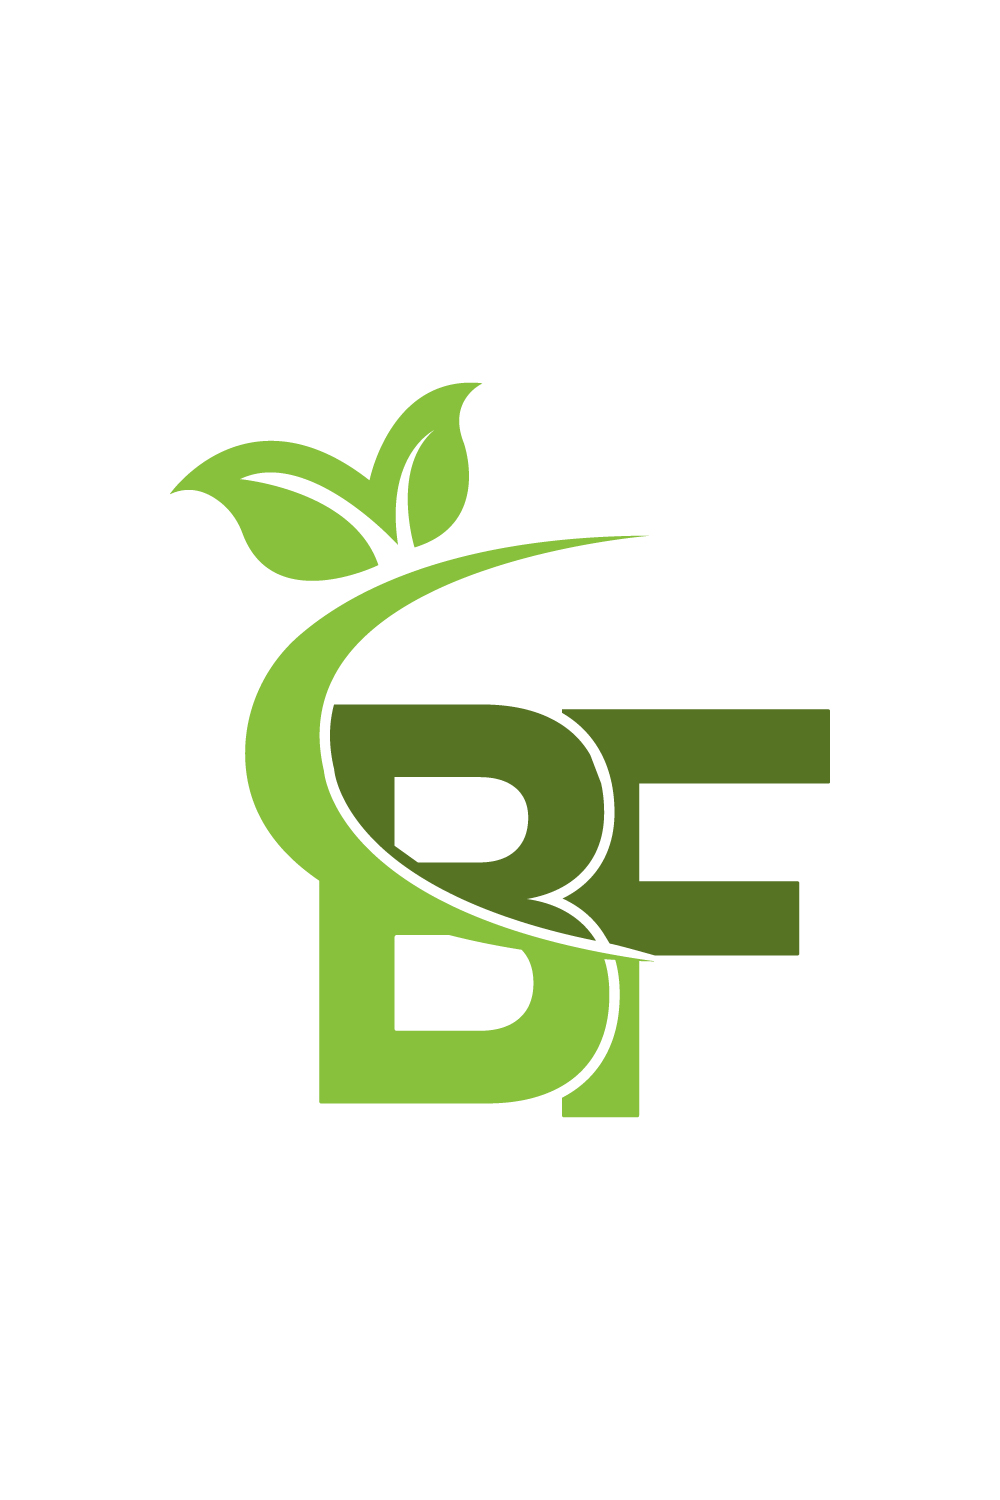 Initials BF letters logo design vector images Green leaf BF logo best icon Natural leaf logo design BF vegetable logo design FB logo template best brand pinterest preview image.